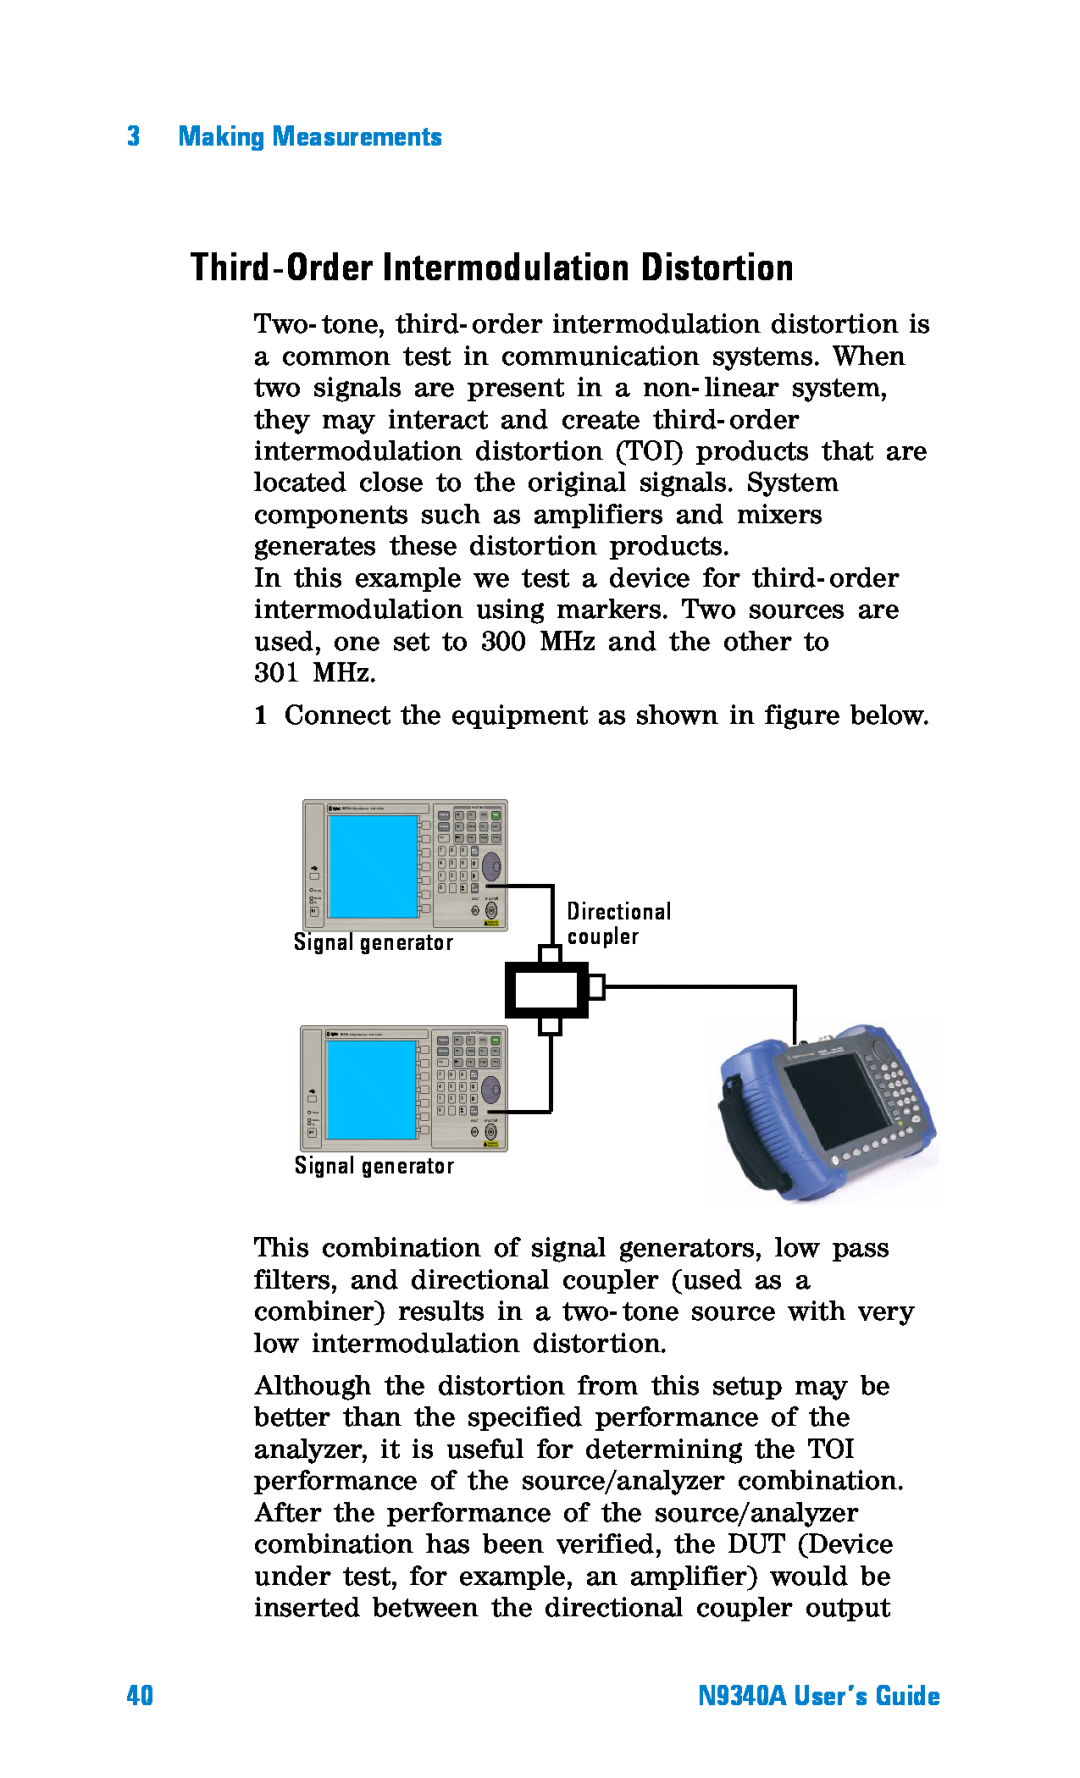 Agilent Technologies N9340A manual Third-Order Intermodulation Distortion, Making Measurements 